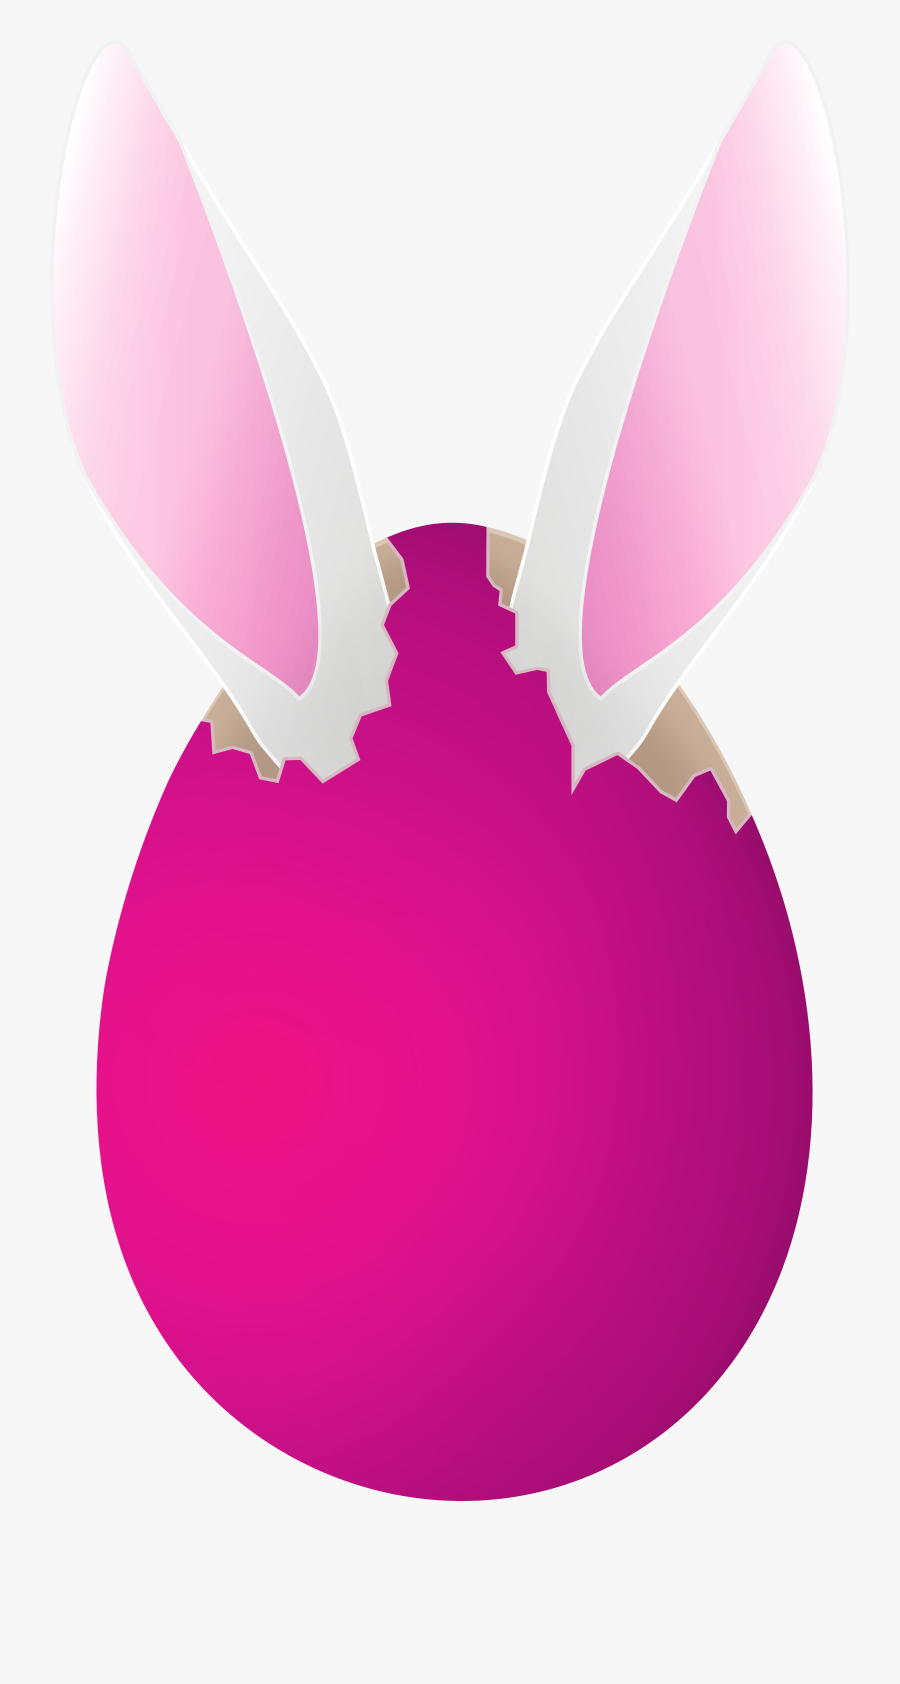 Easter Eggs Clipart Pink - Illustration, Transparent Clipart